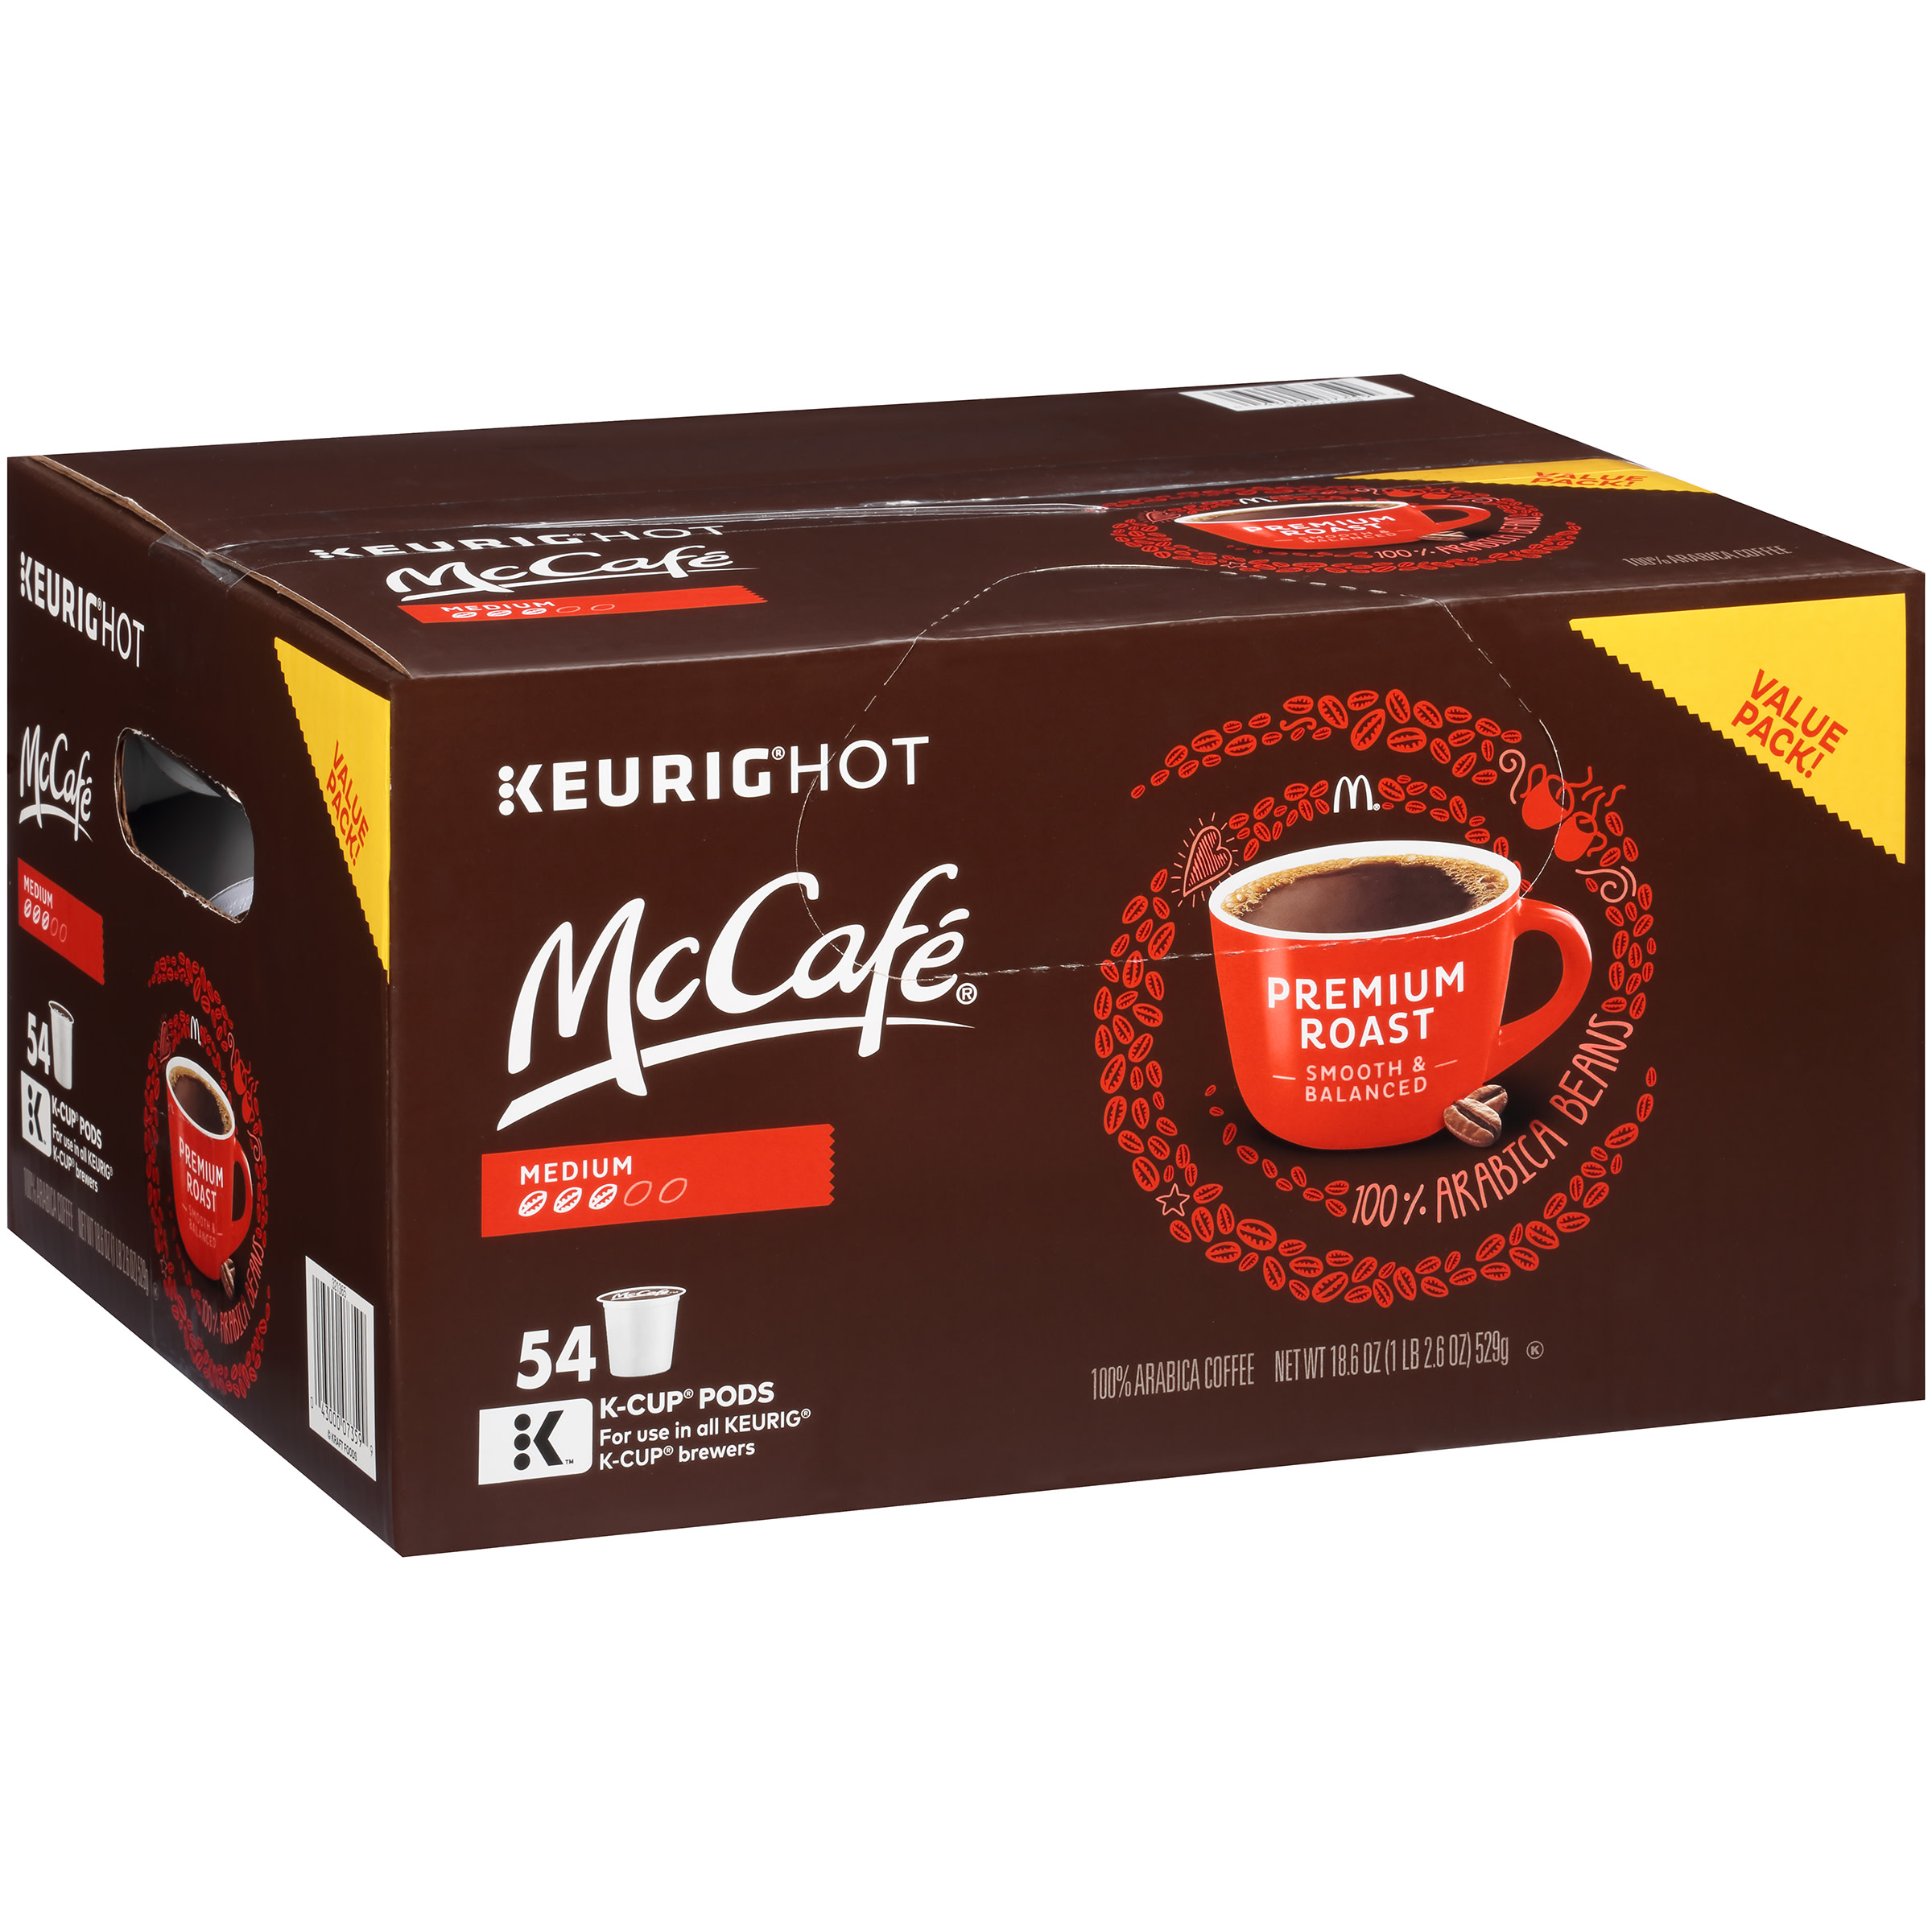 McCafe Premium Roast Medium Coffee K-Cup Pods, 54 ct - 18.6 oz Box - image 3 of 7